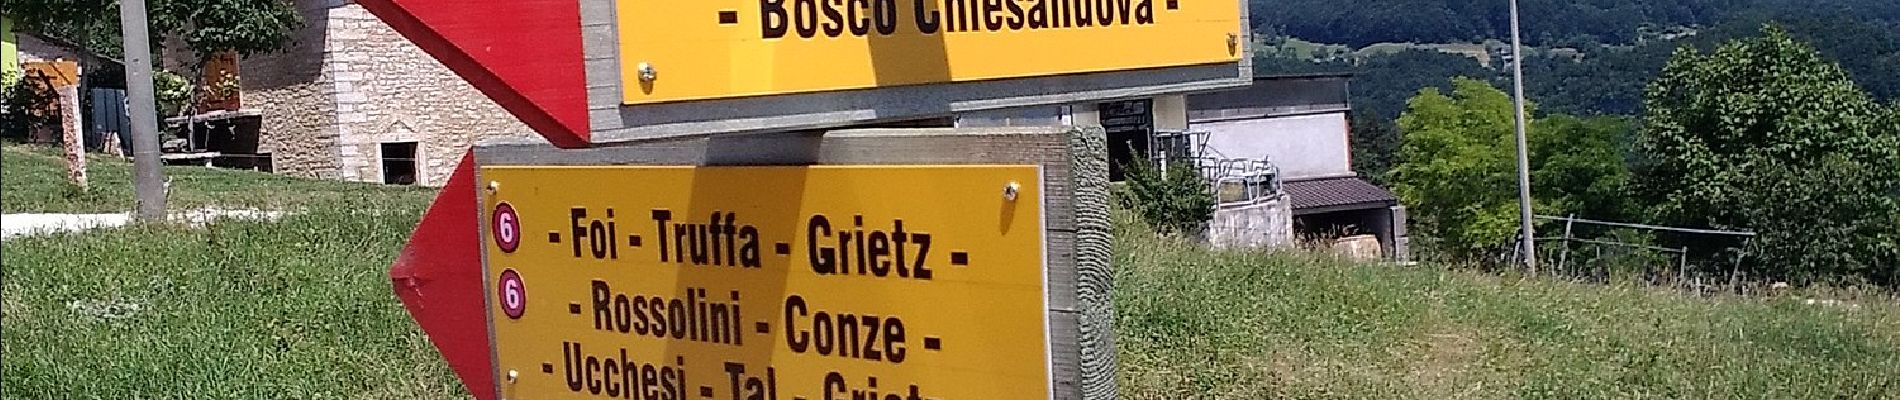 Tocht Te voet Bosco Chiesanuova - Percorso n. 6 - Photo